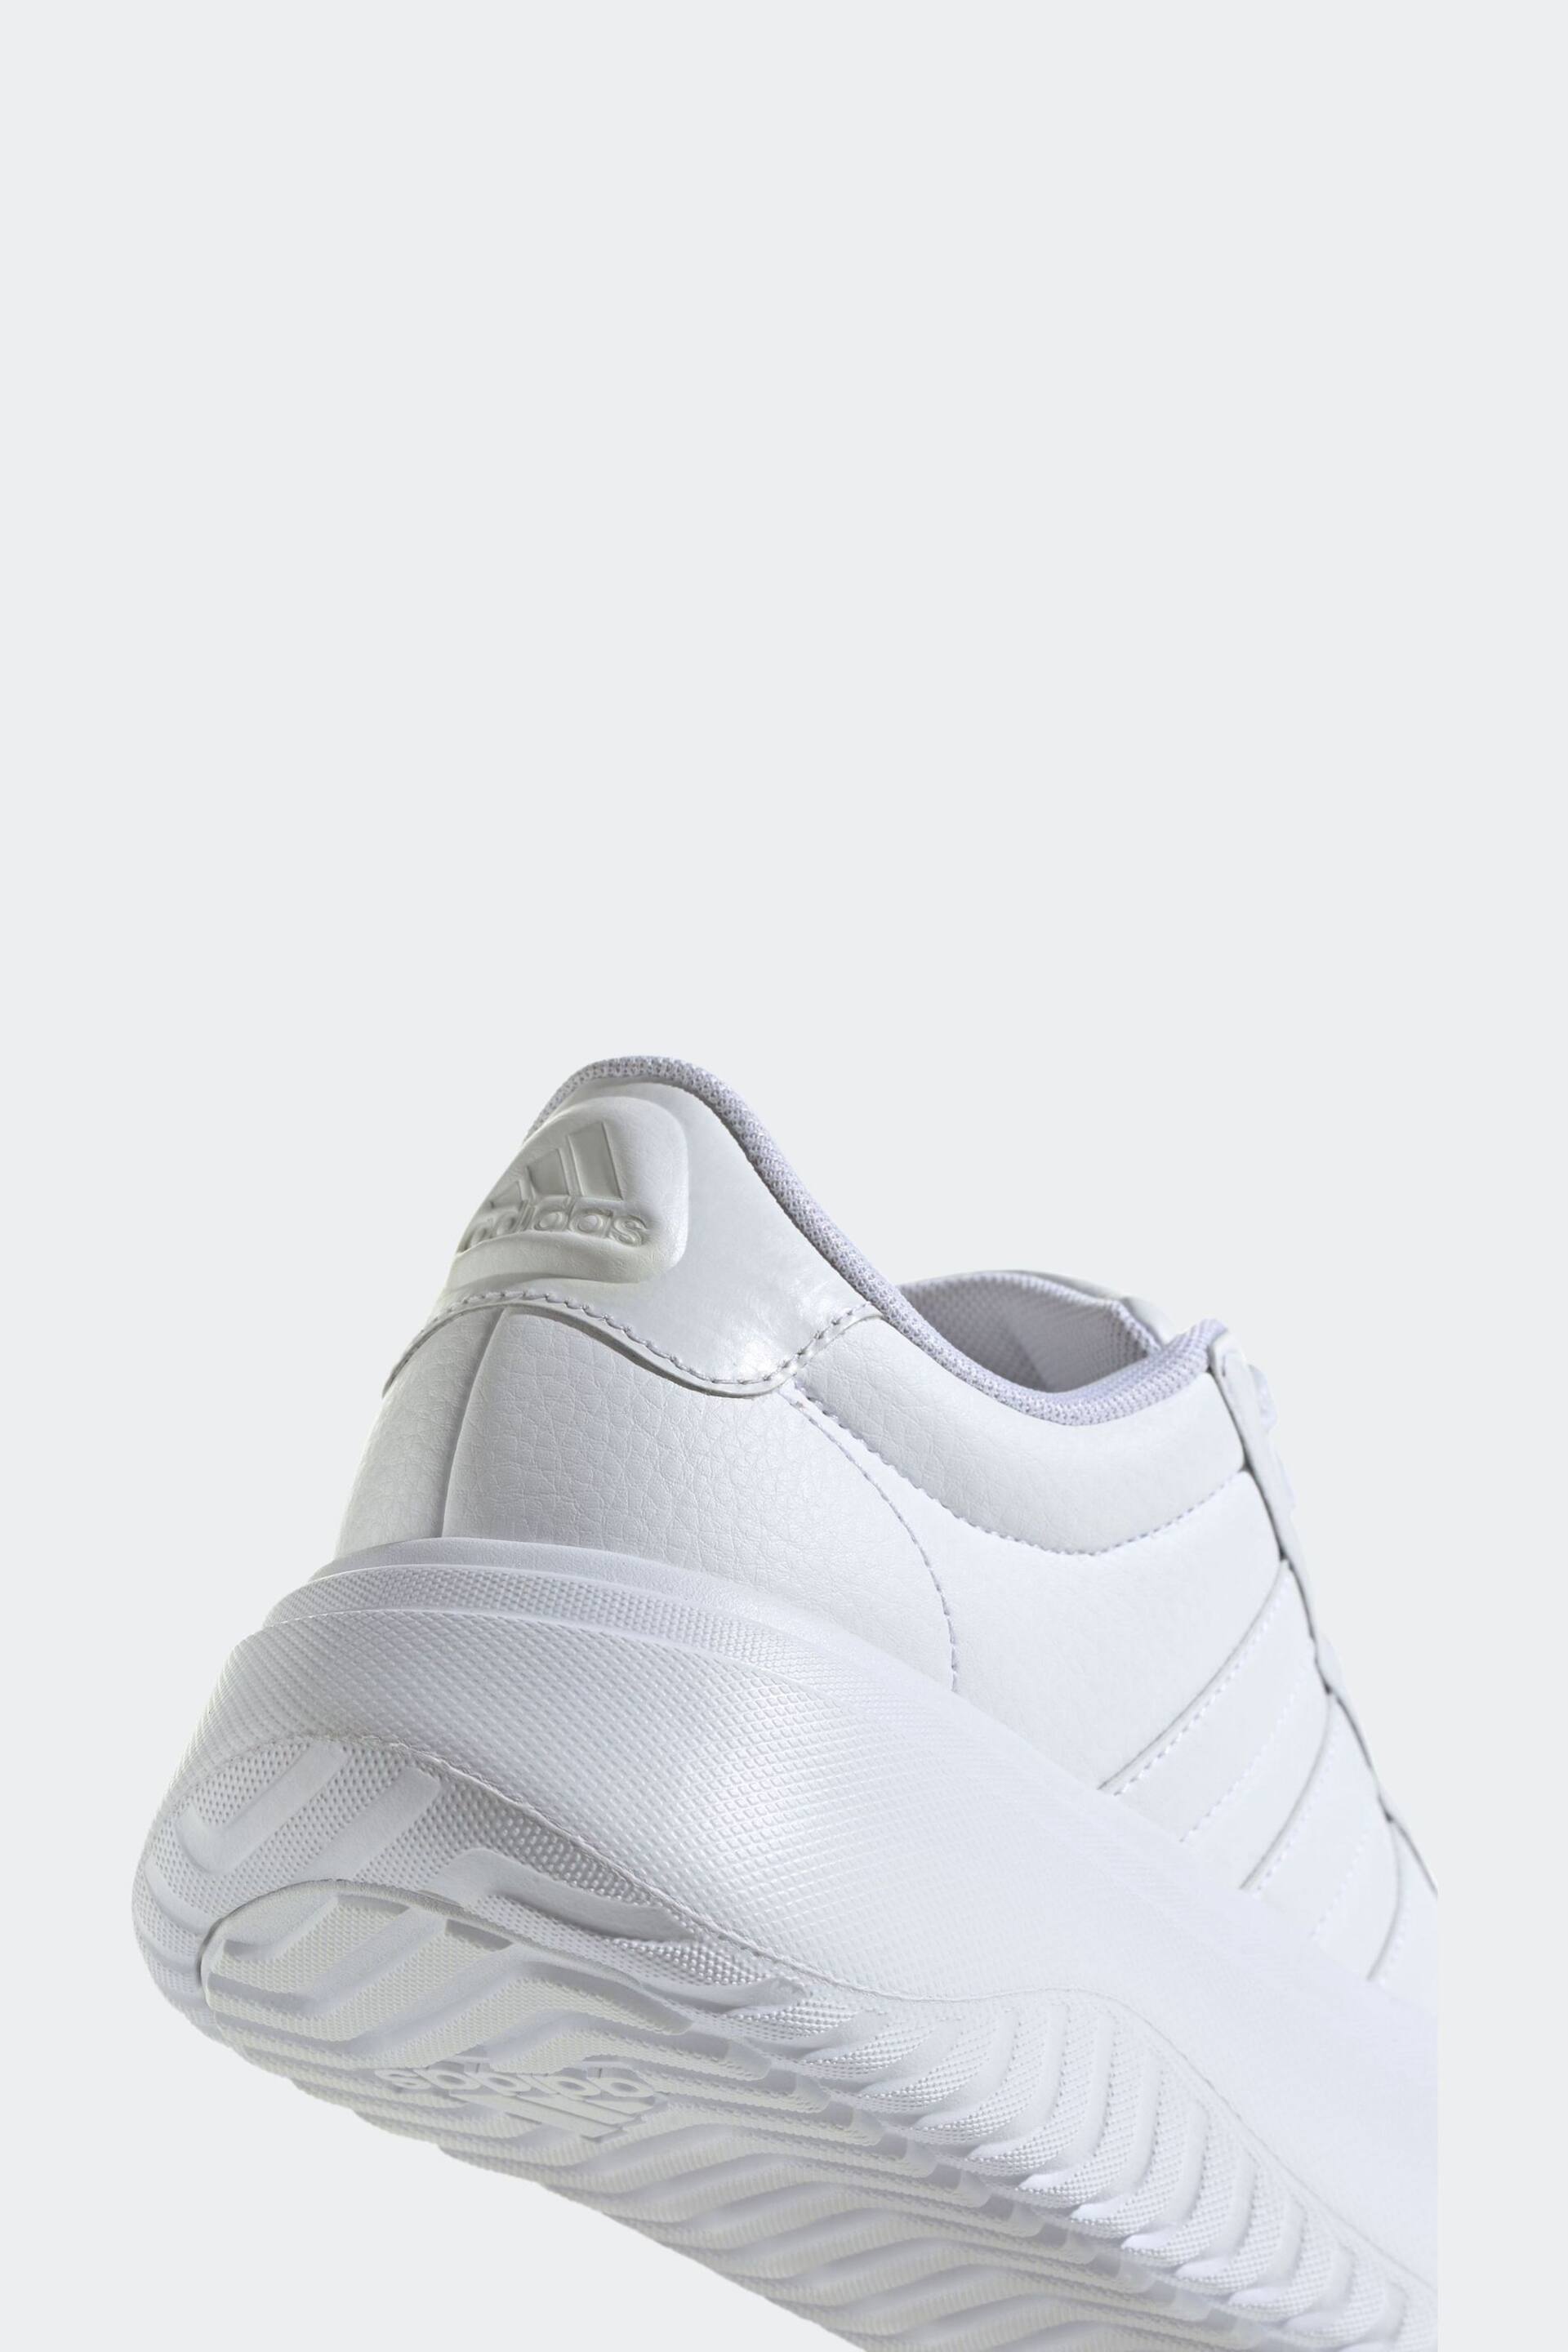 adidas White Grand Court Platform Trainers - Image 9 of 9